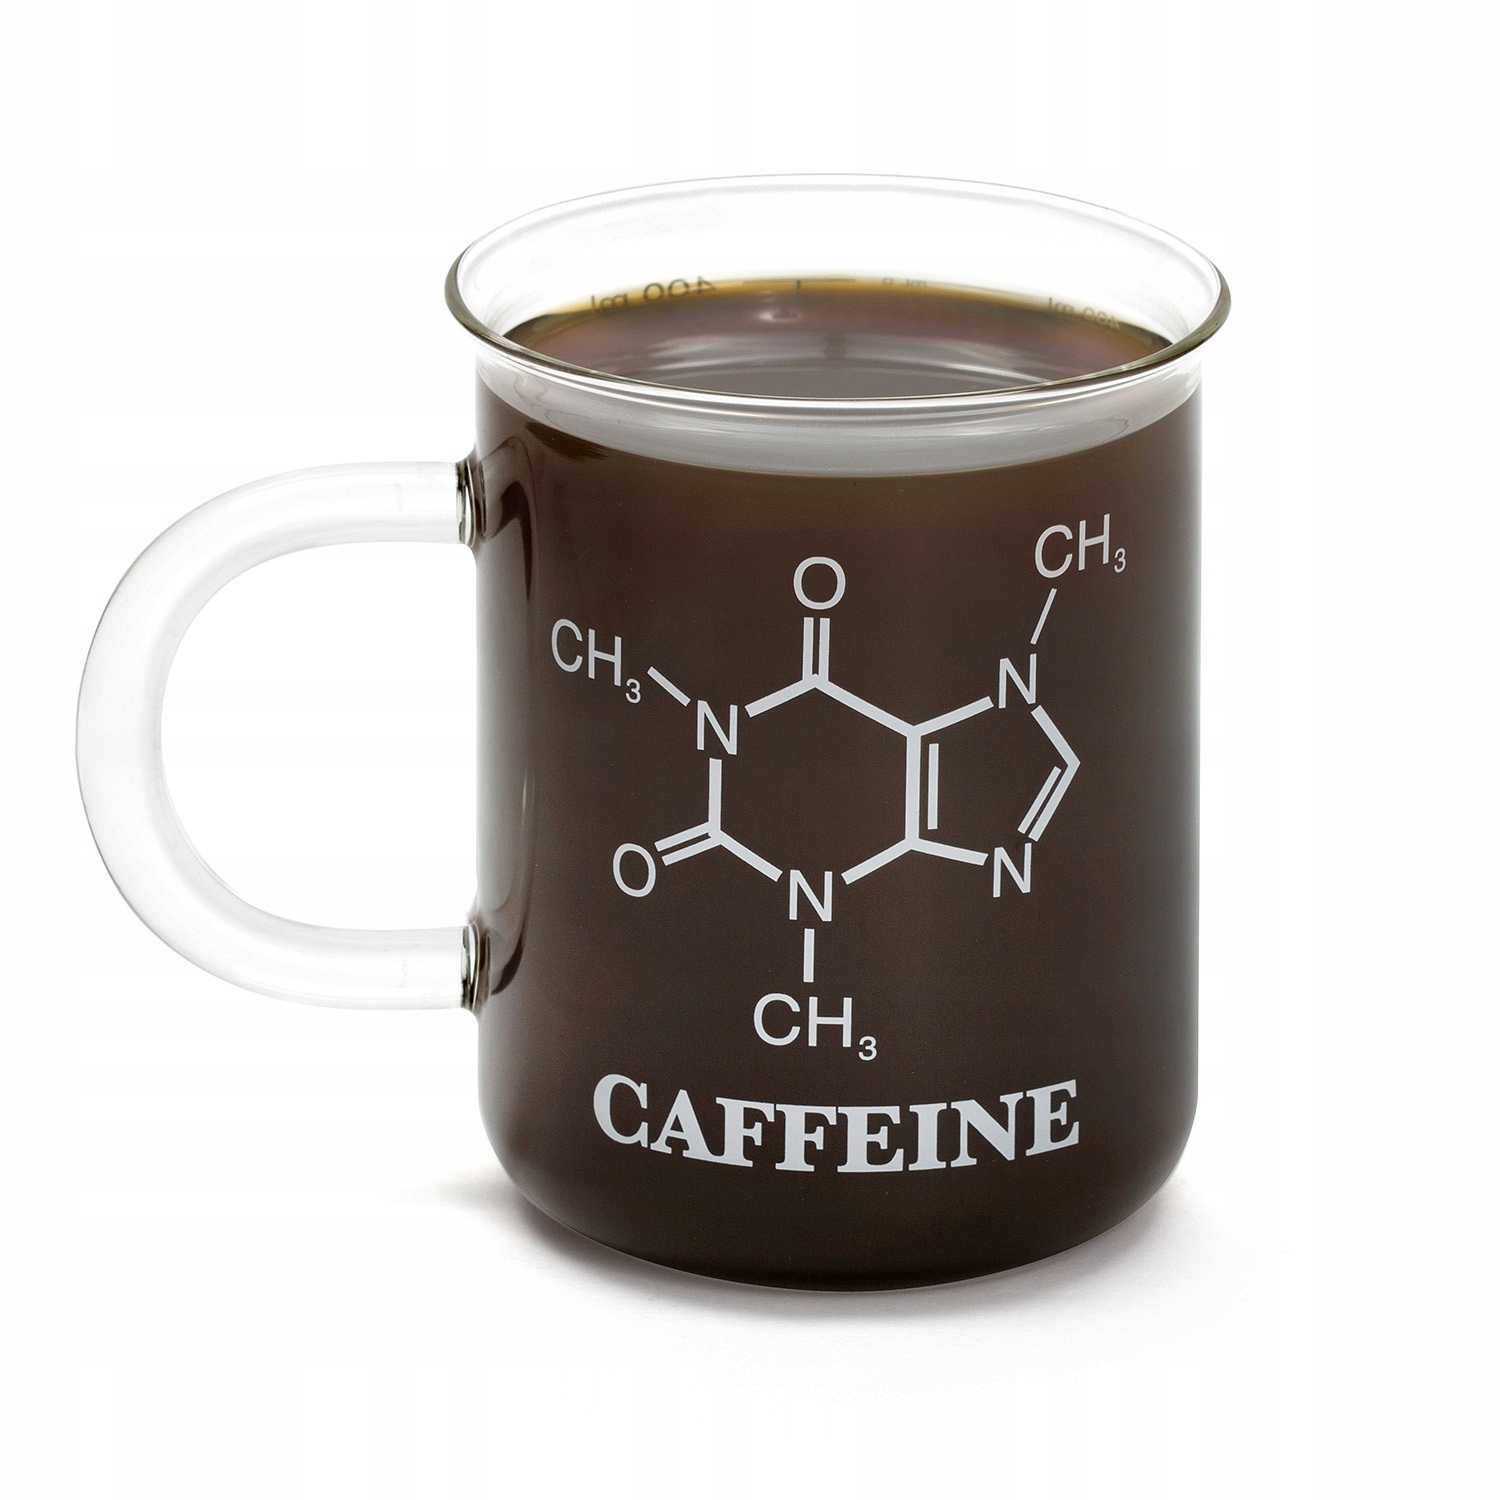 Сильнее кофеина. Кружка для химика. Кружки с химическими формулами. Кружка кофеин. Кружка с надписью кофеин.